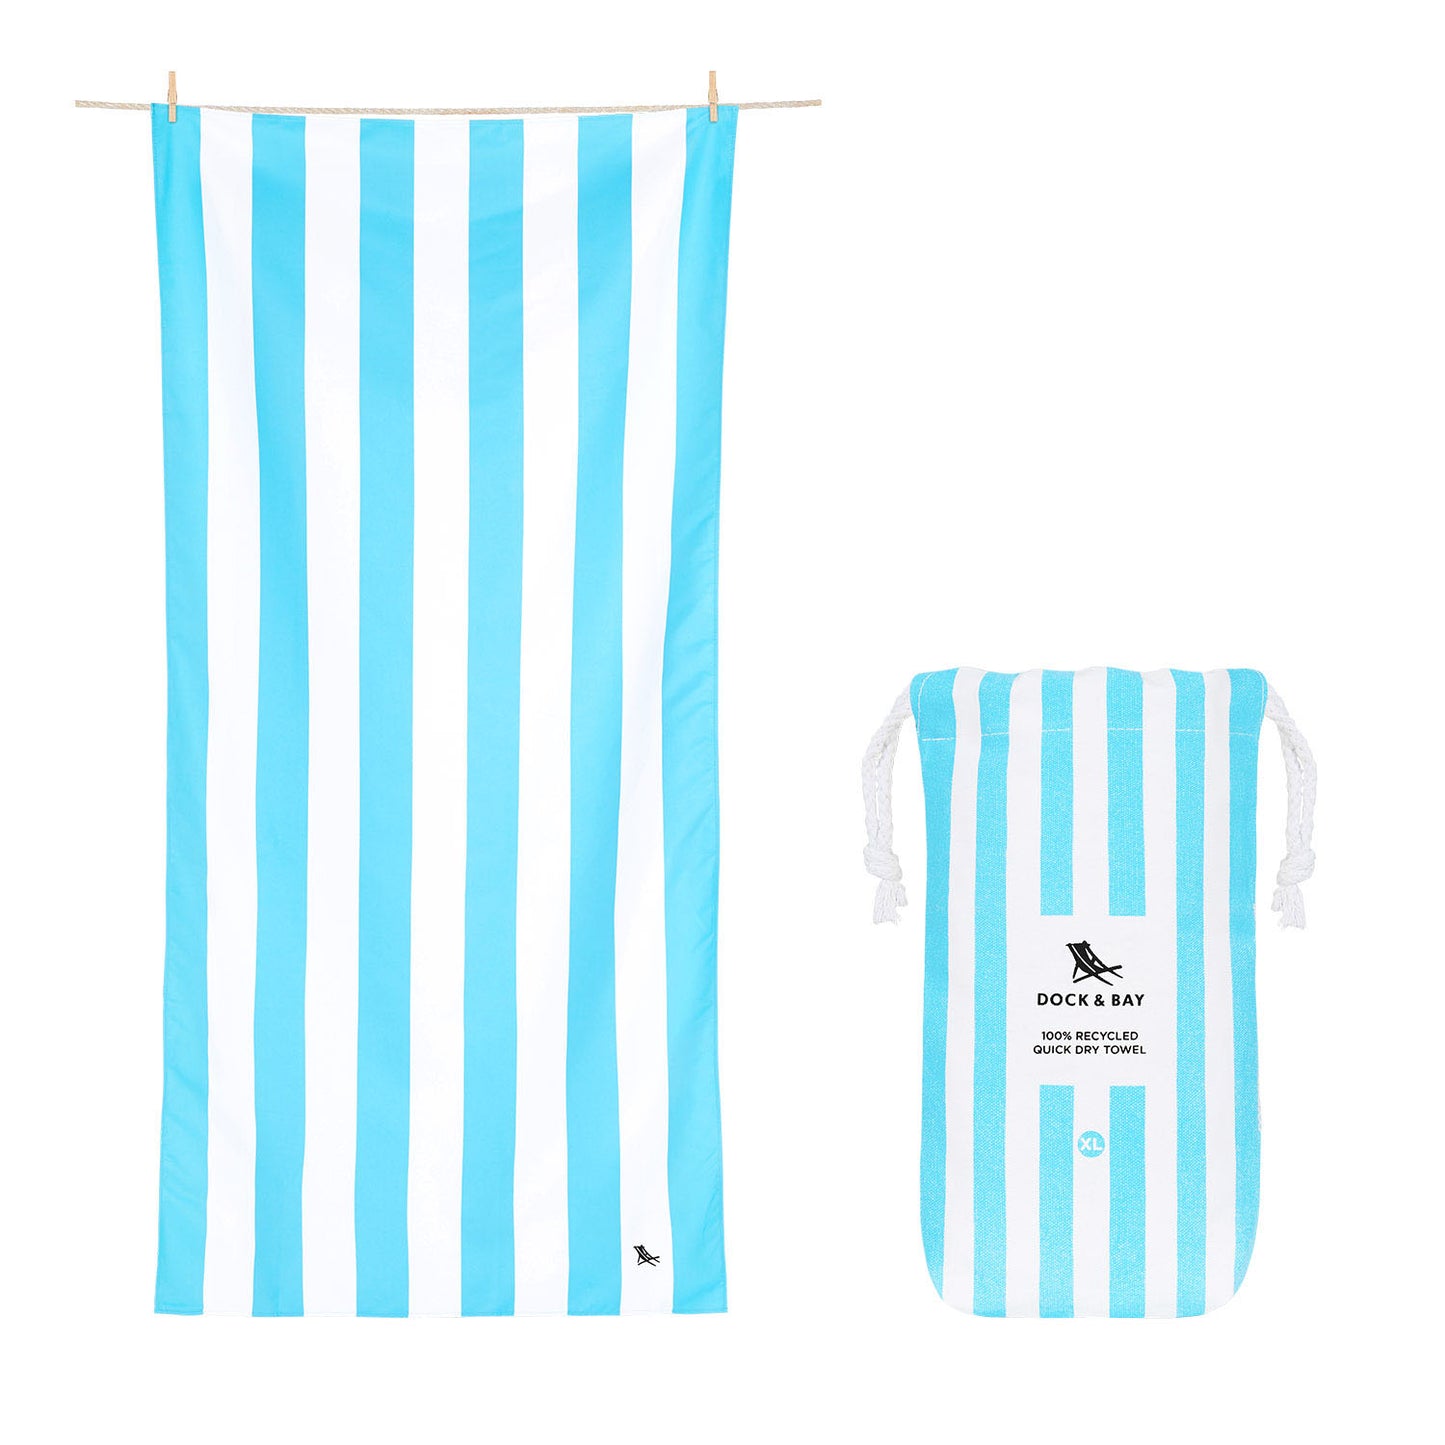 Dock & Bay Quick Dry Beach Towel - XL